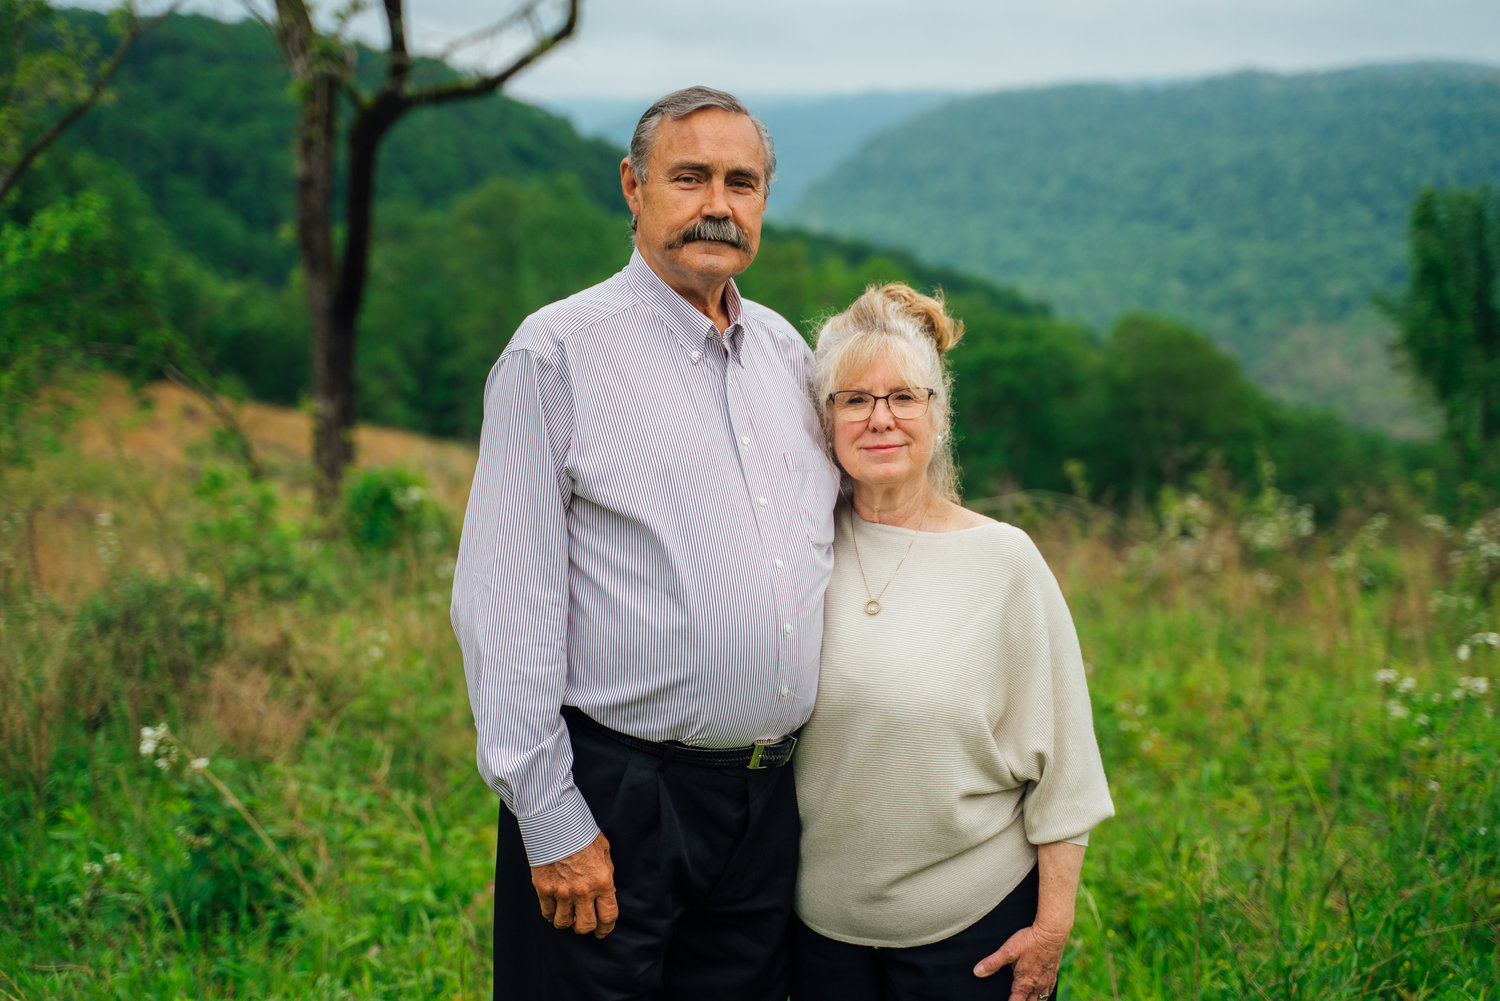 Raymond and Pam white will celebrate their 50th wedding anniversary Sunday, May 23.